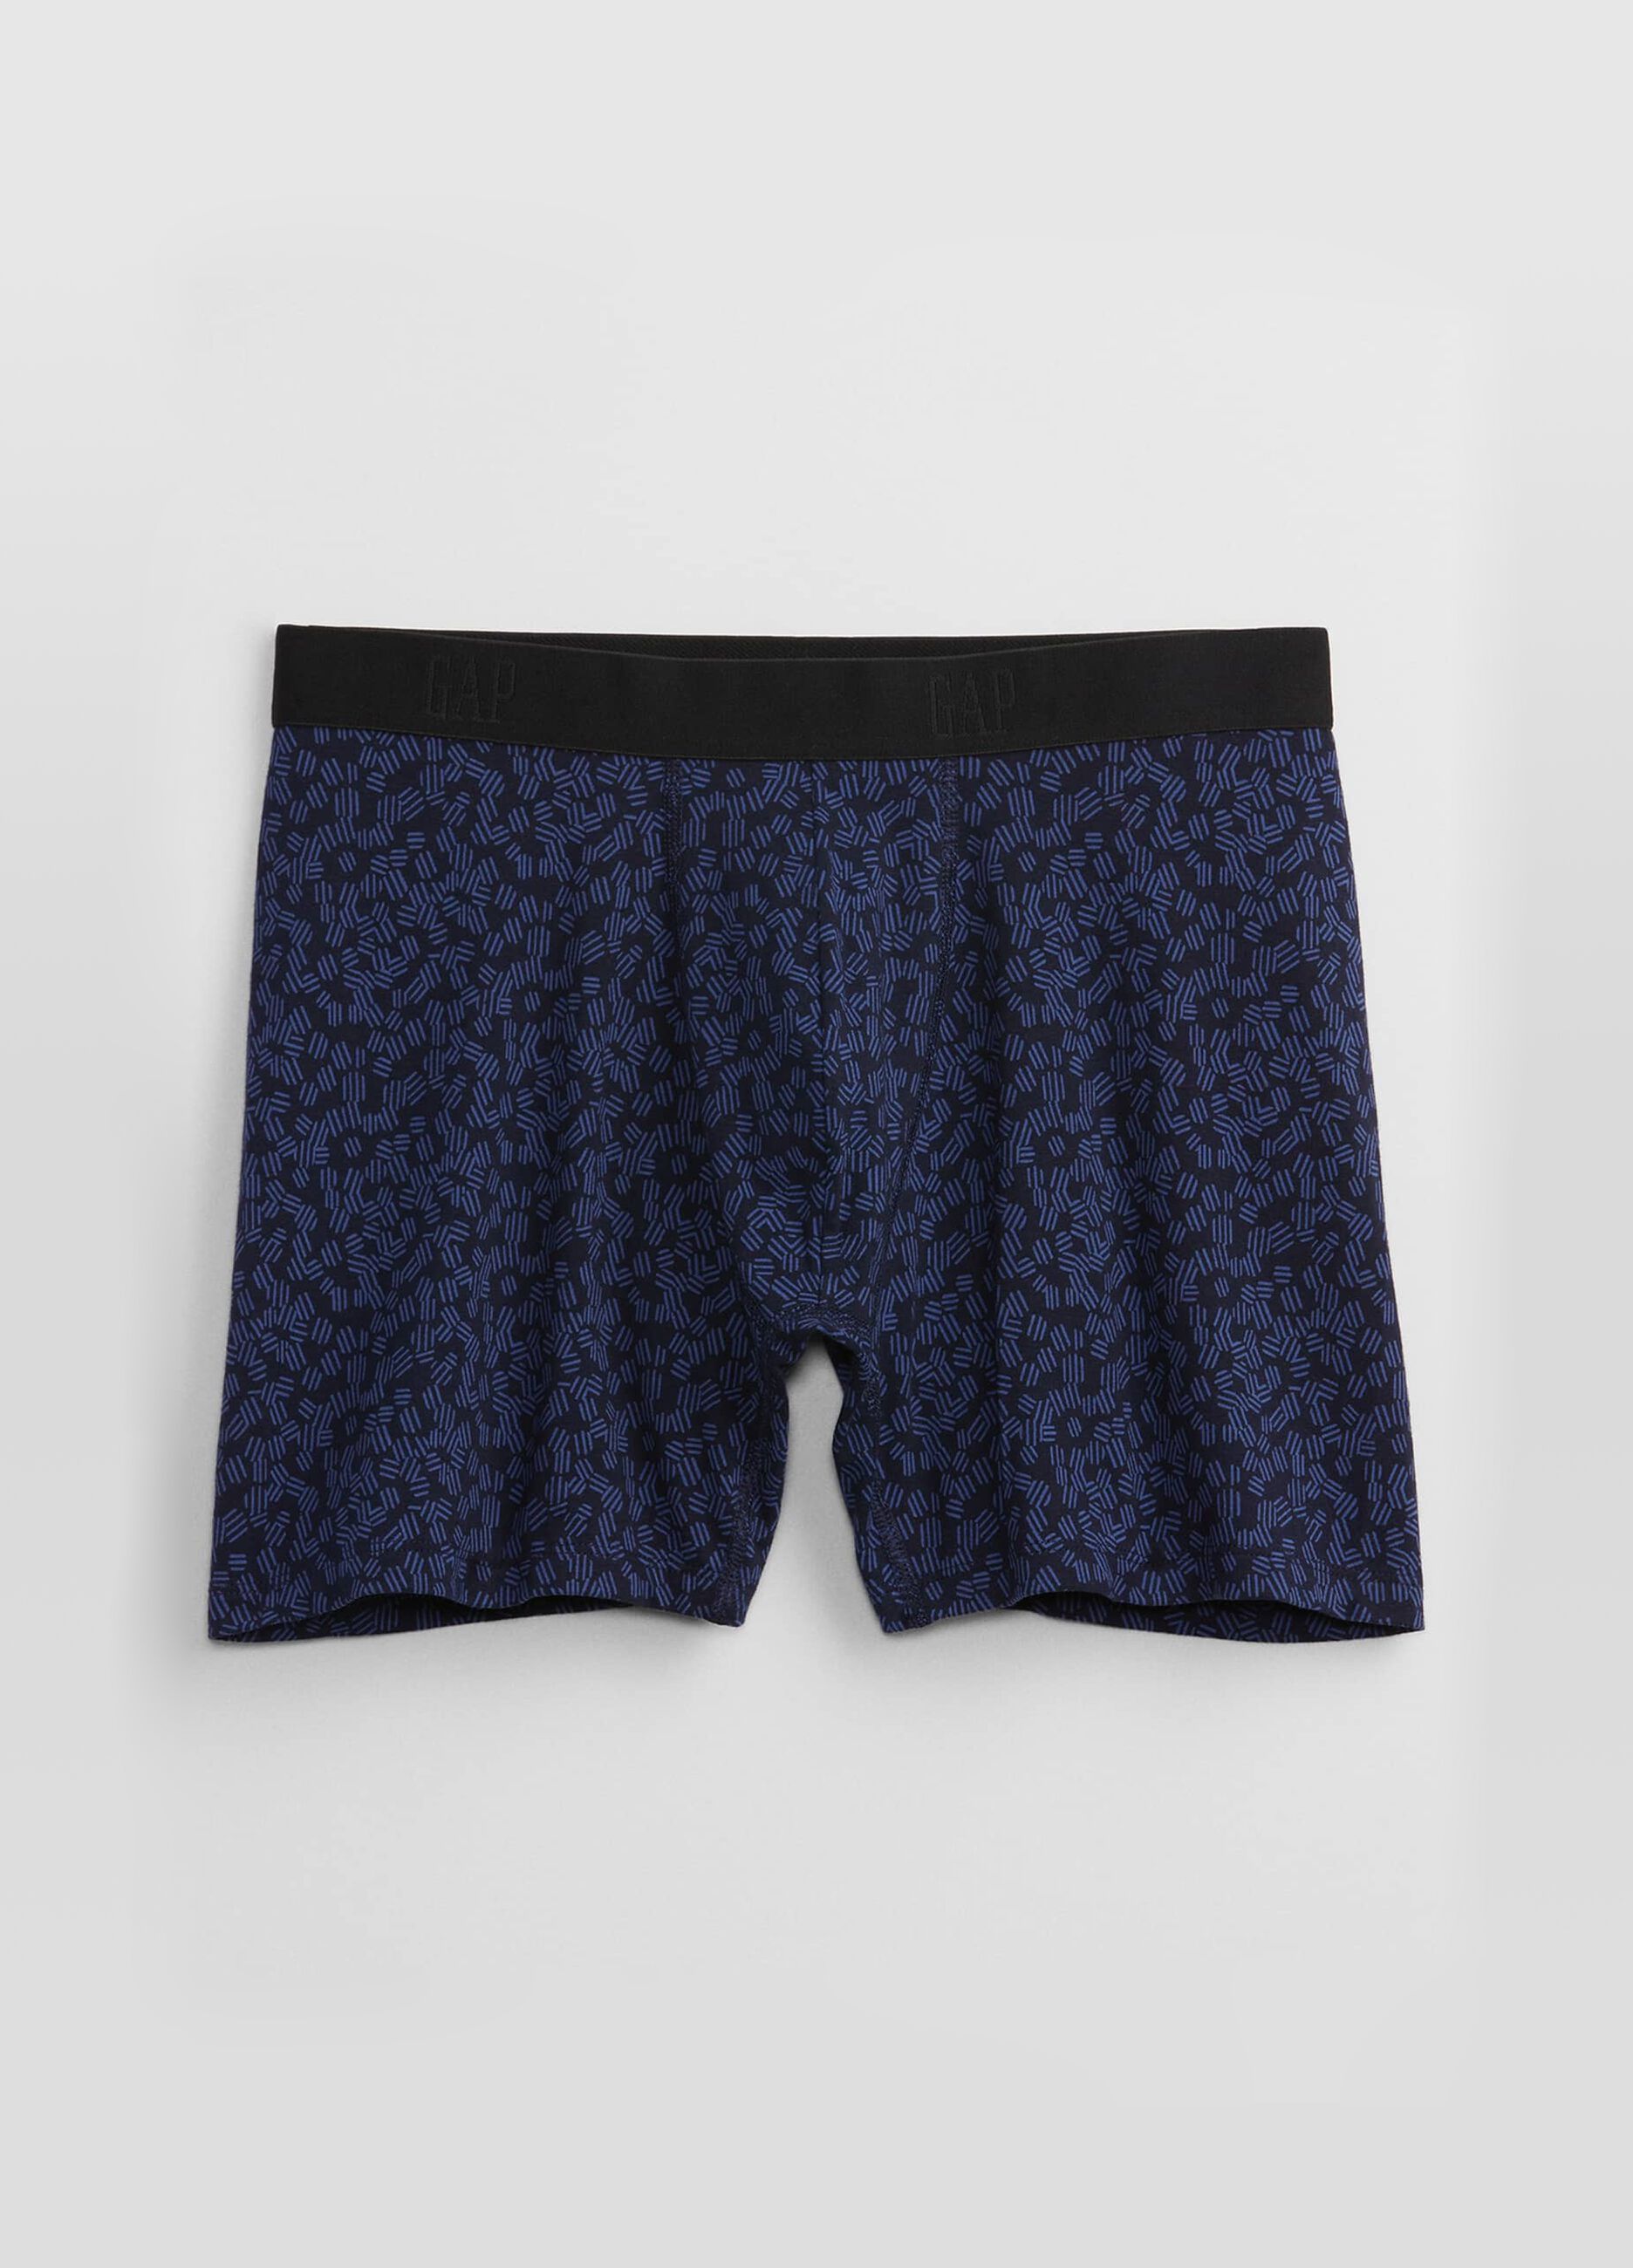 Boxer shorts with micro polka dot pattern